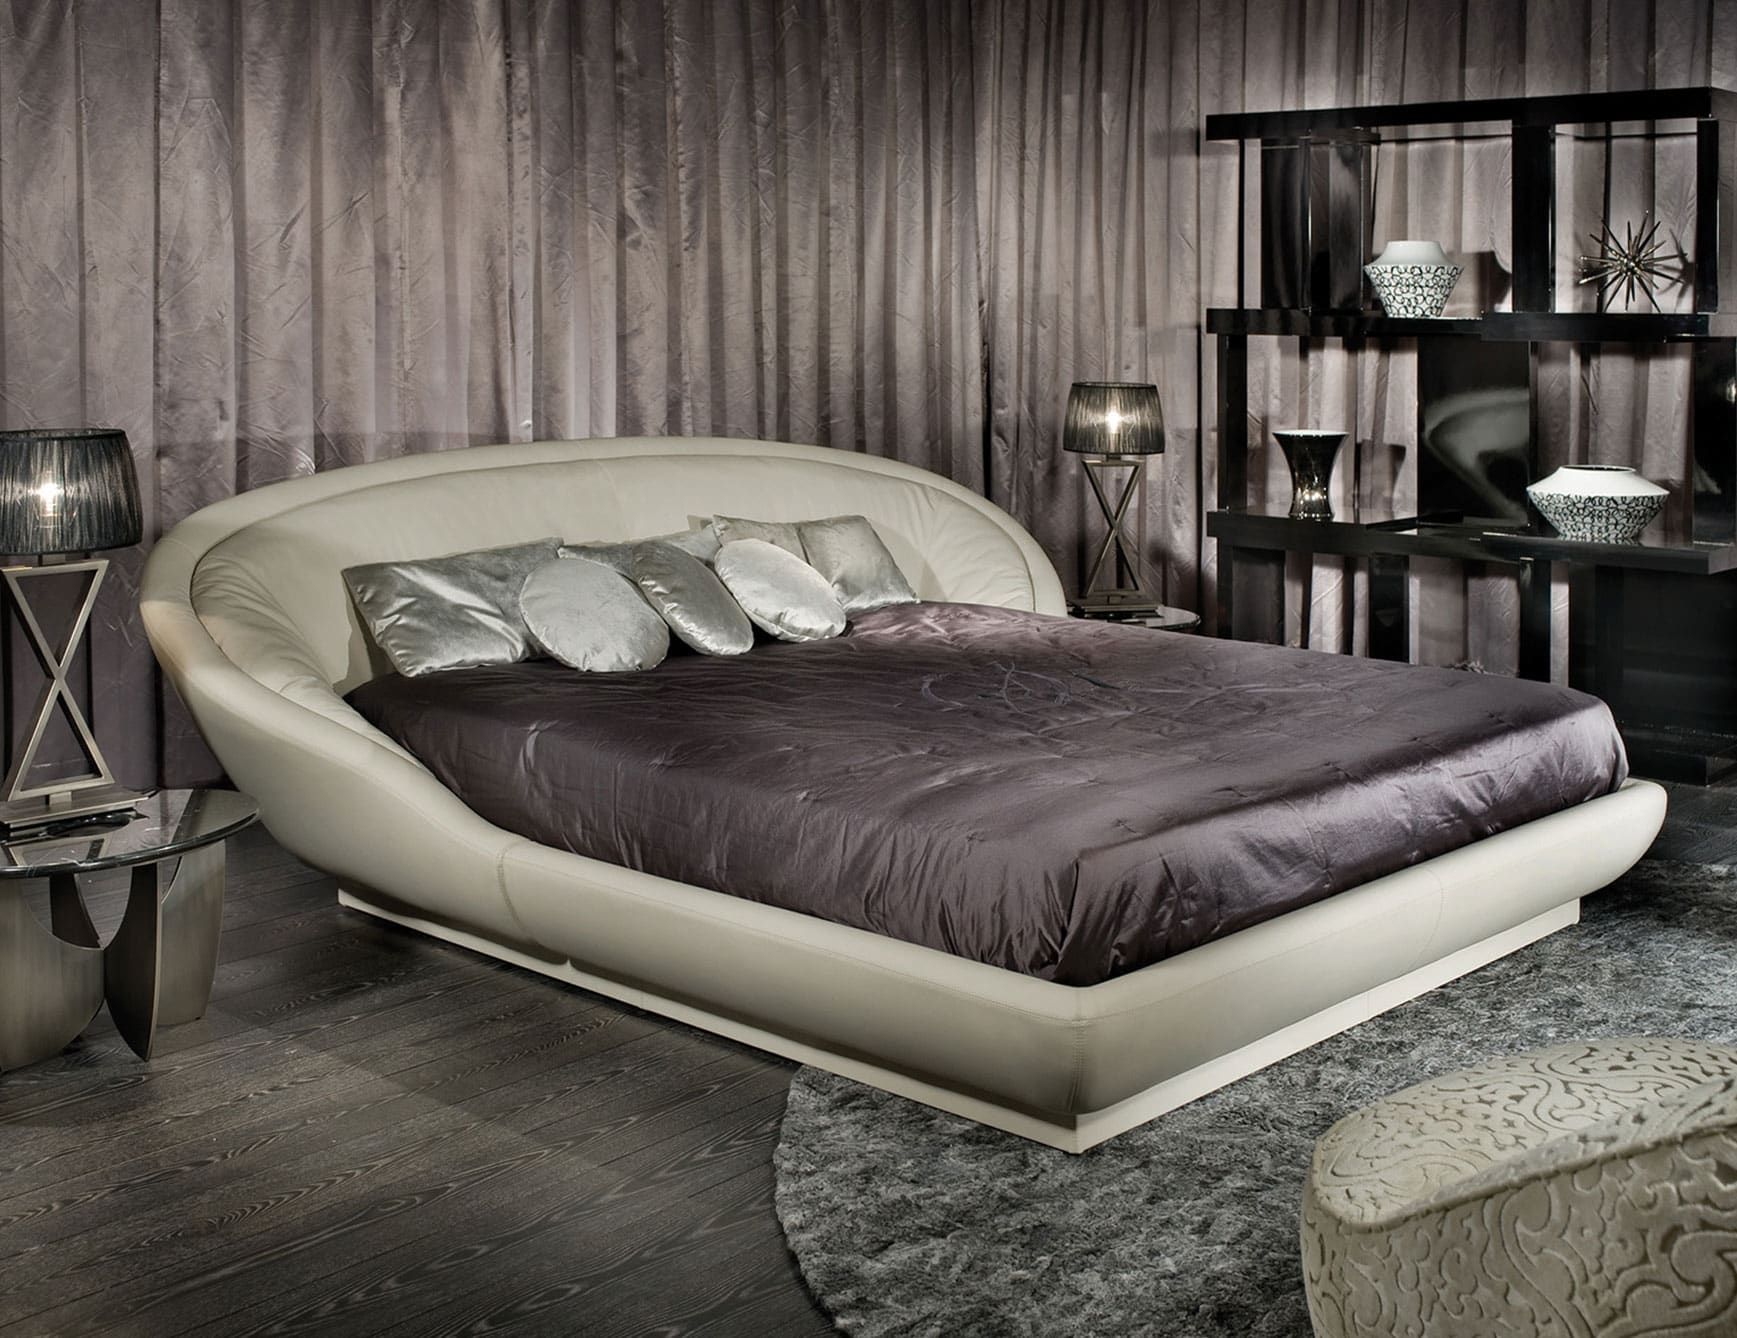 Ball Room modern Italian beds in beige leather